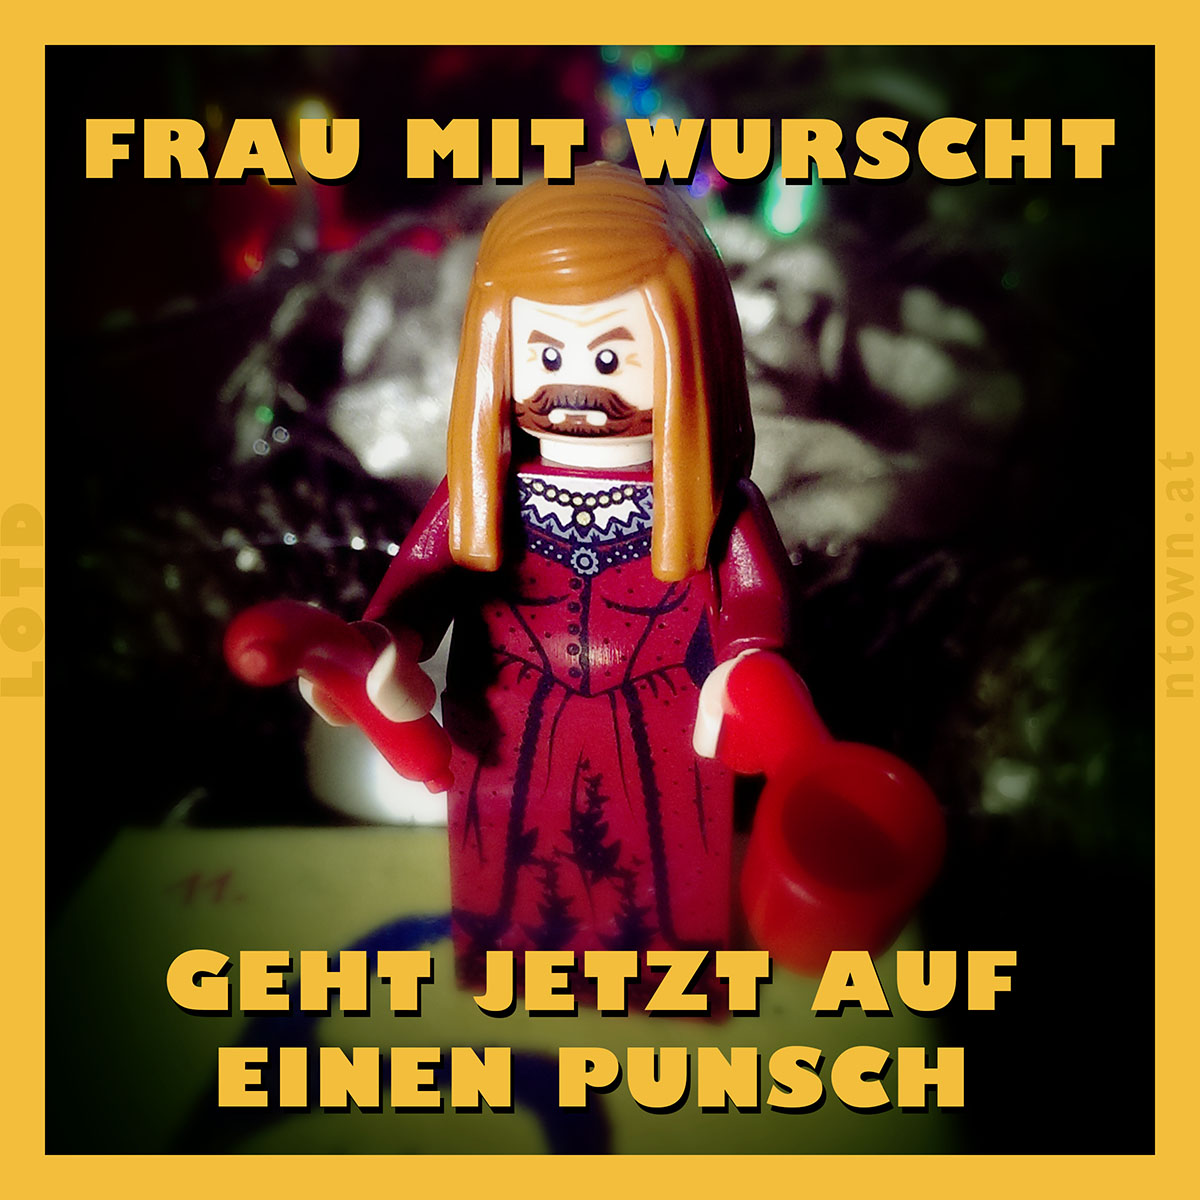 LOTD - 2014-01-17 - Frau with Wurscht is having a Punsch now.